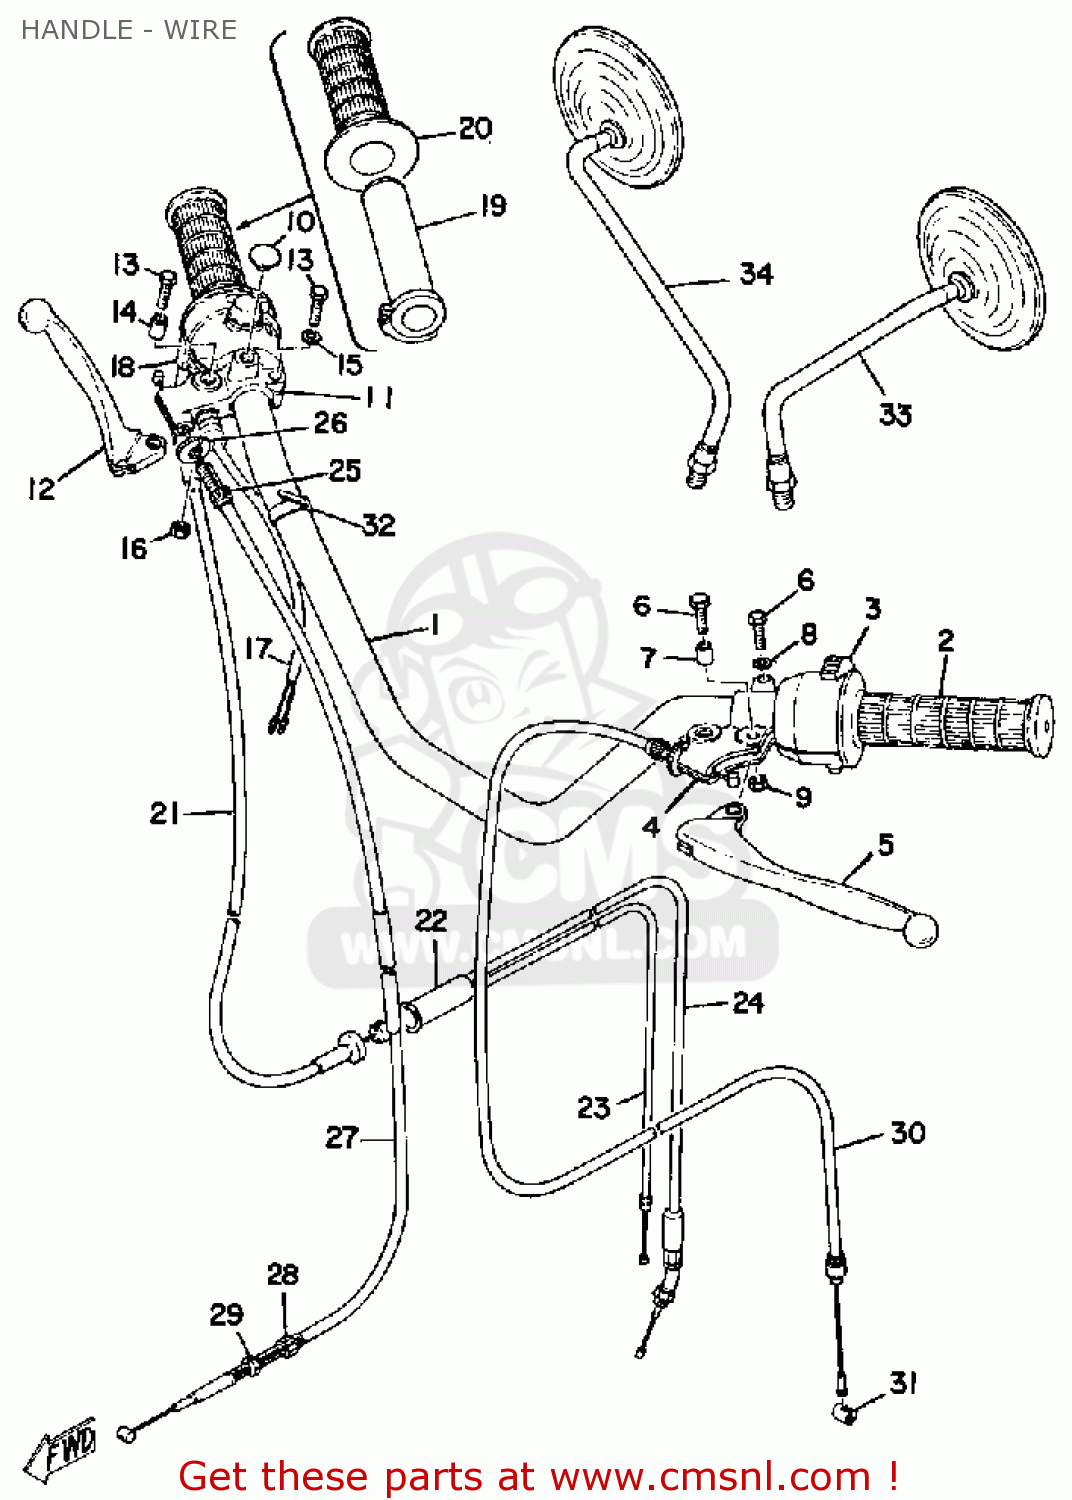 ... Diagram further Honda 125 Wiring Diagram. on wiring diagram xrm 125